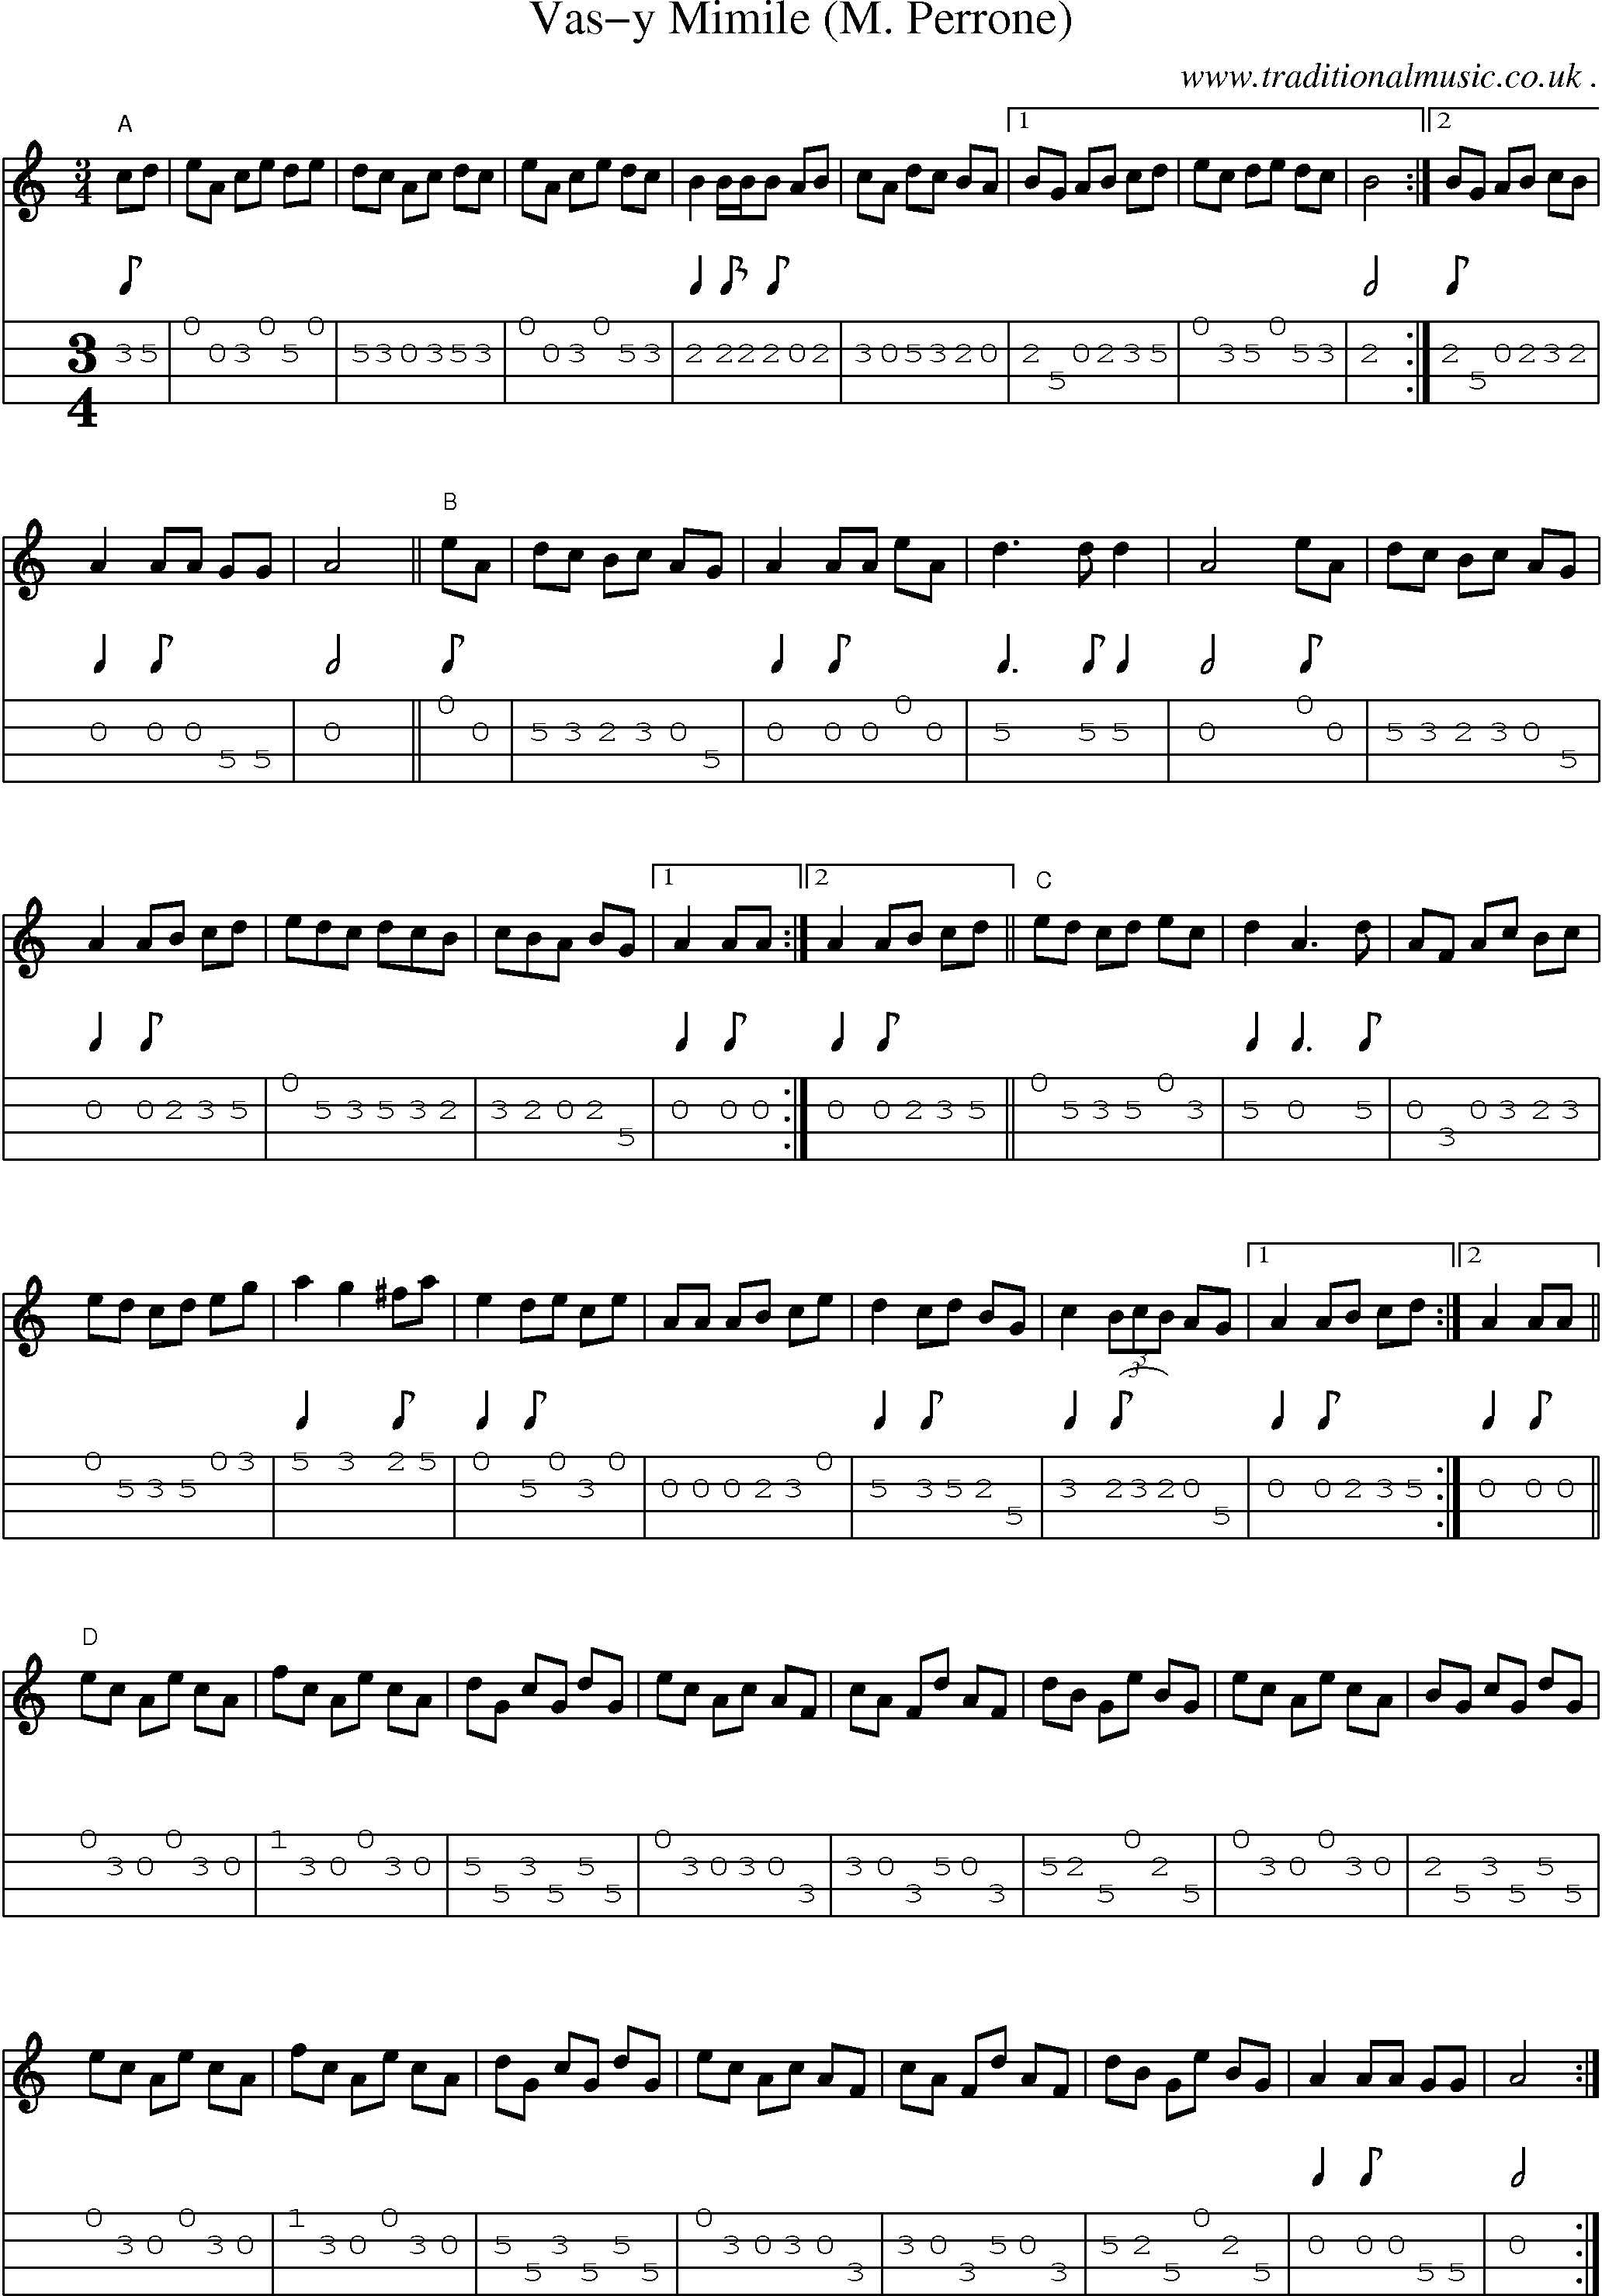 Sheet-Music and Mandolin Tabs for Vas-y Mimile (m Perrone)